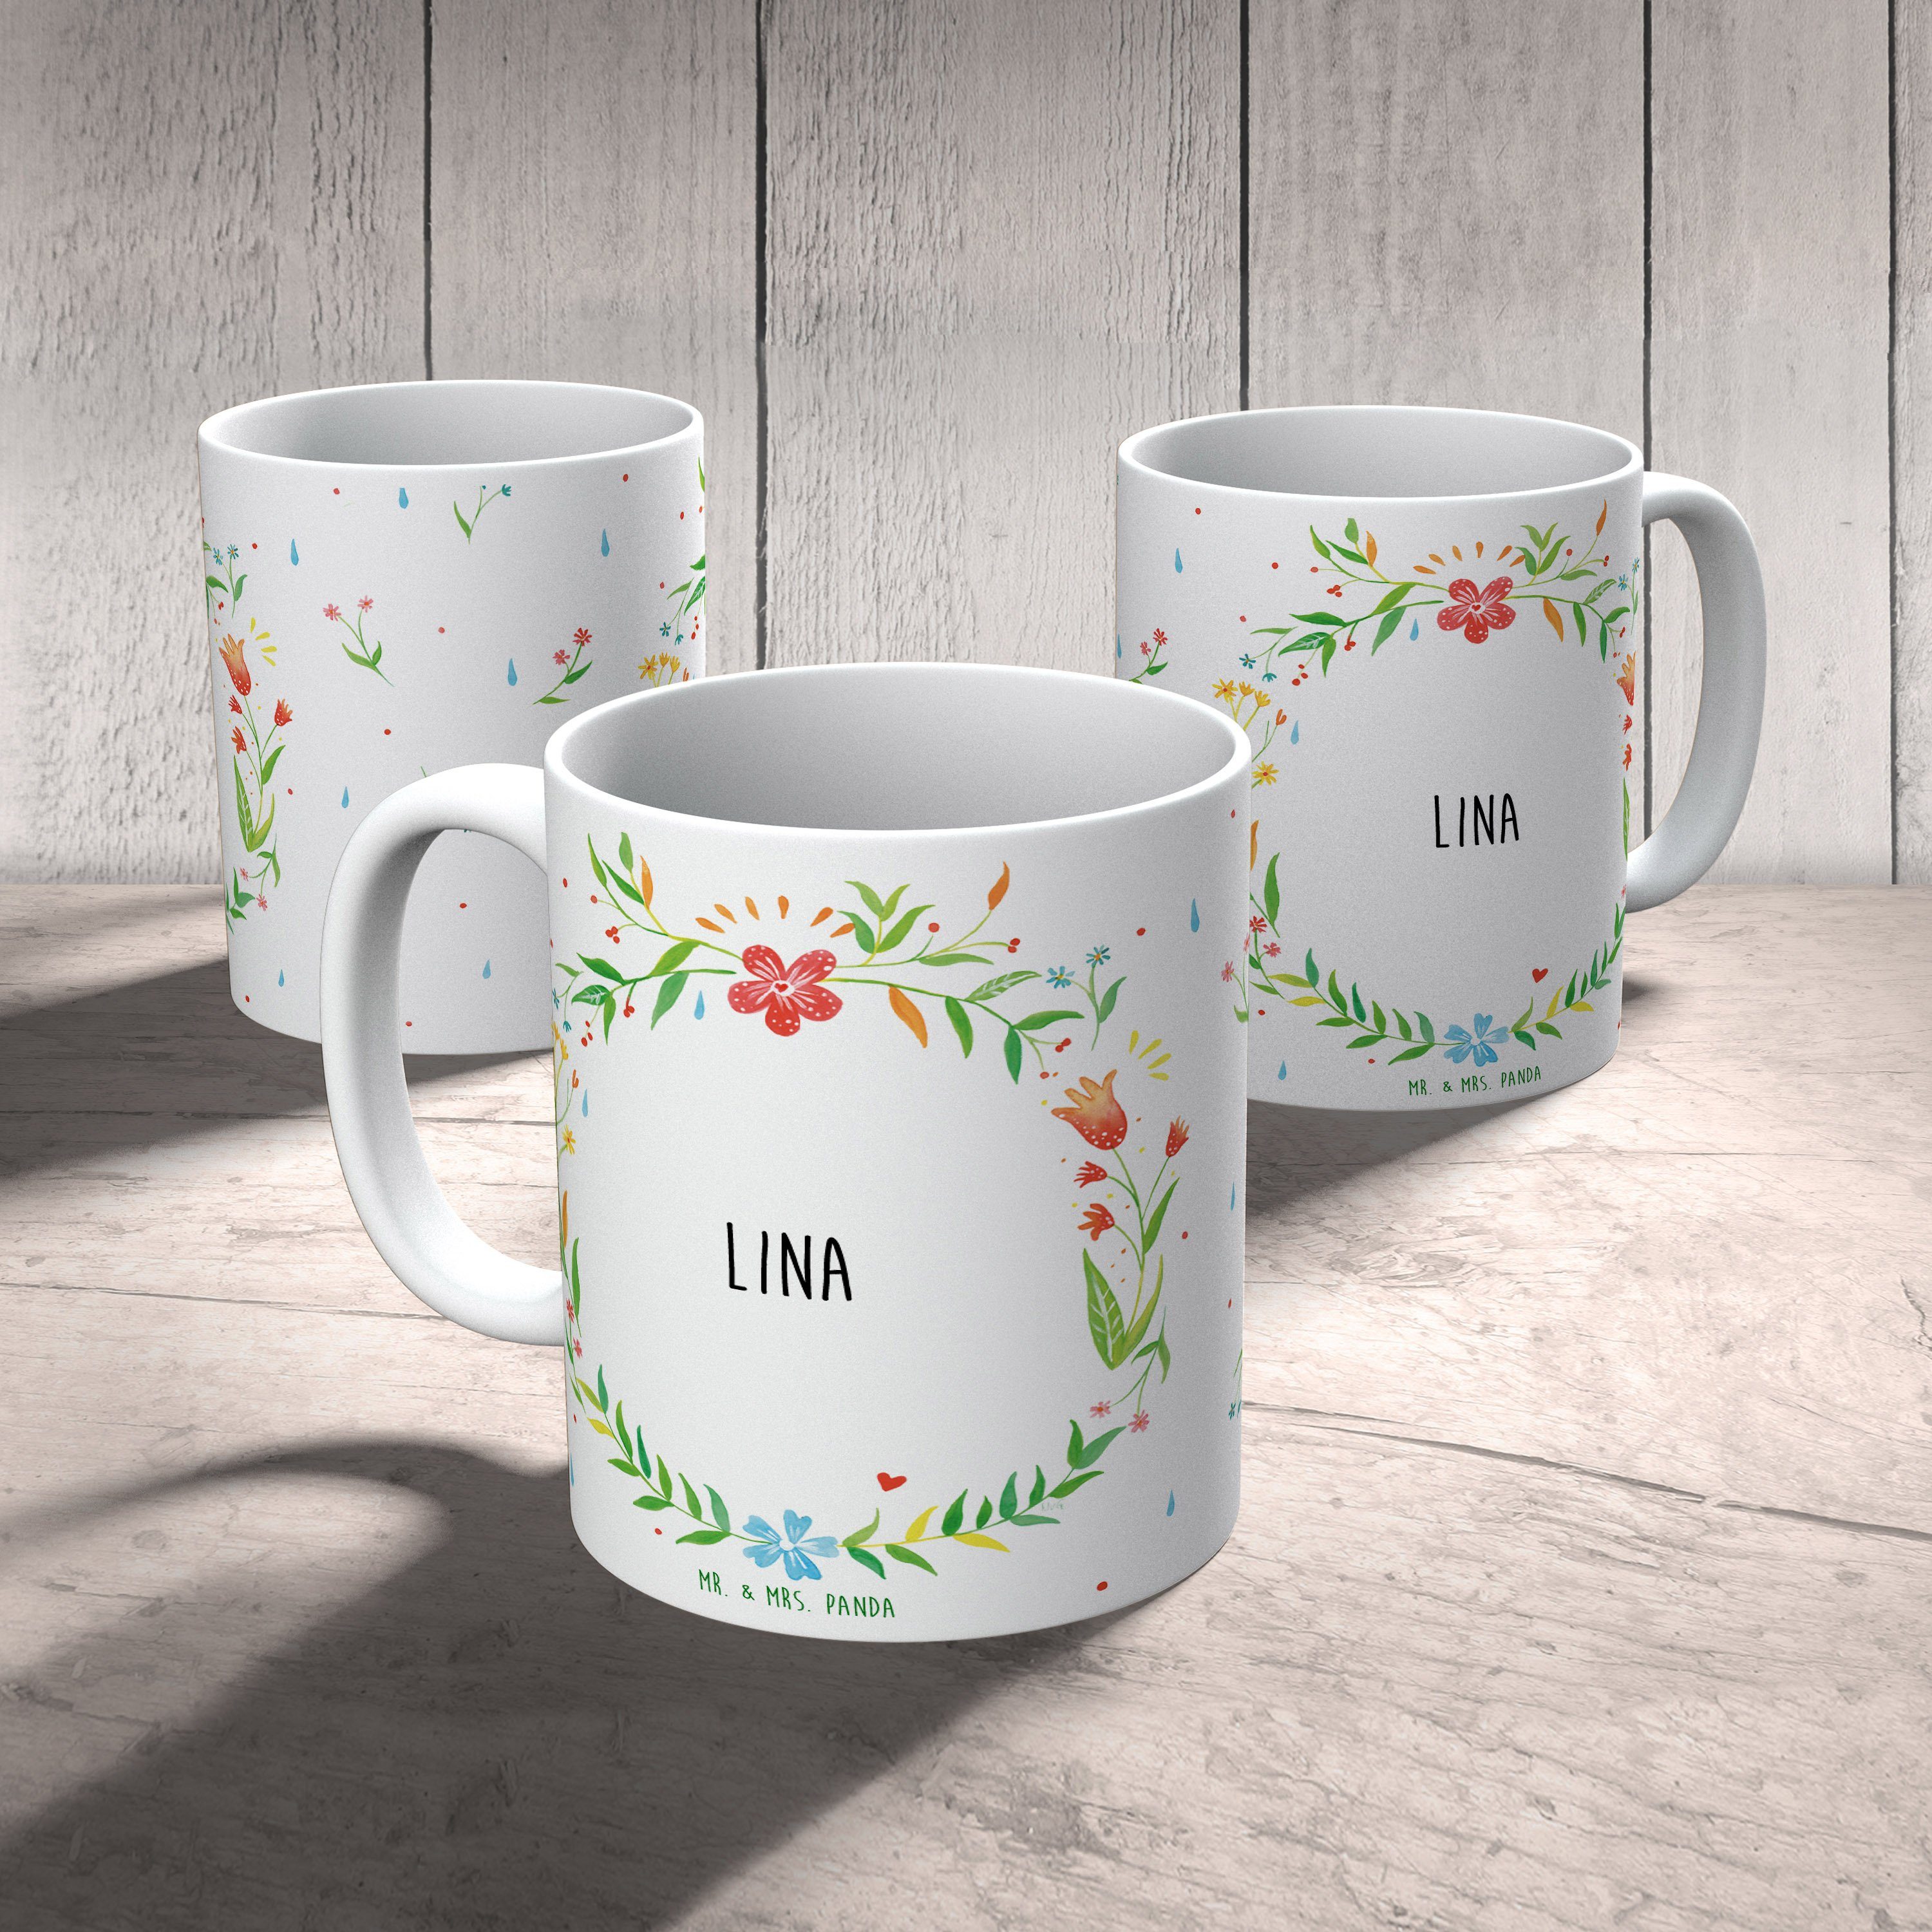 Mrs. - Panda Lina Tasse, Büro Keramik Porzellantasse, Mr. Keramiktasse, Tasse & Kaffeetass, Geschenk,